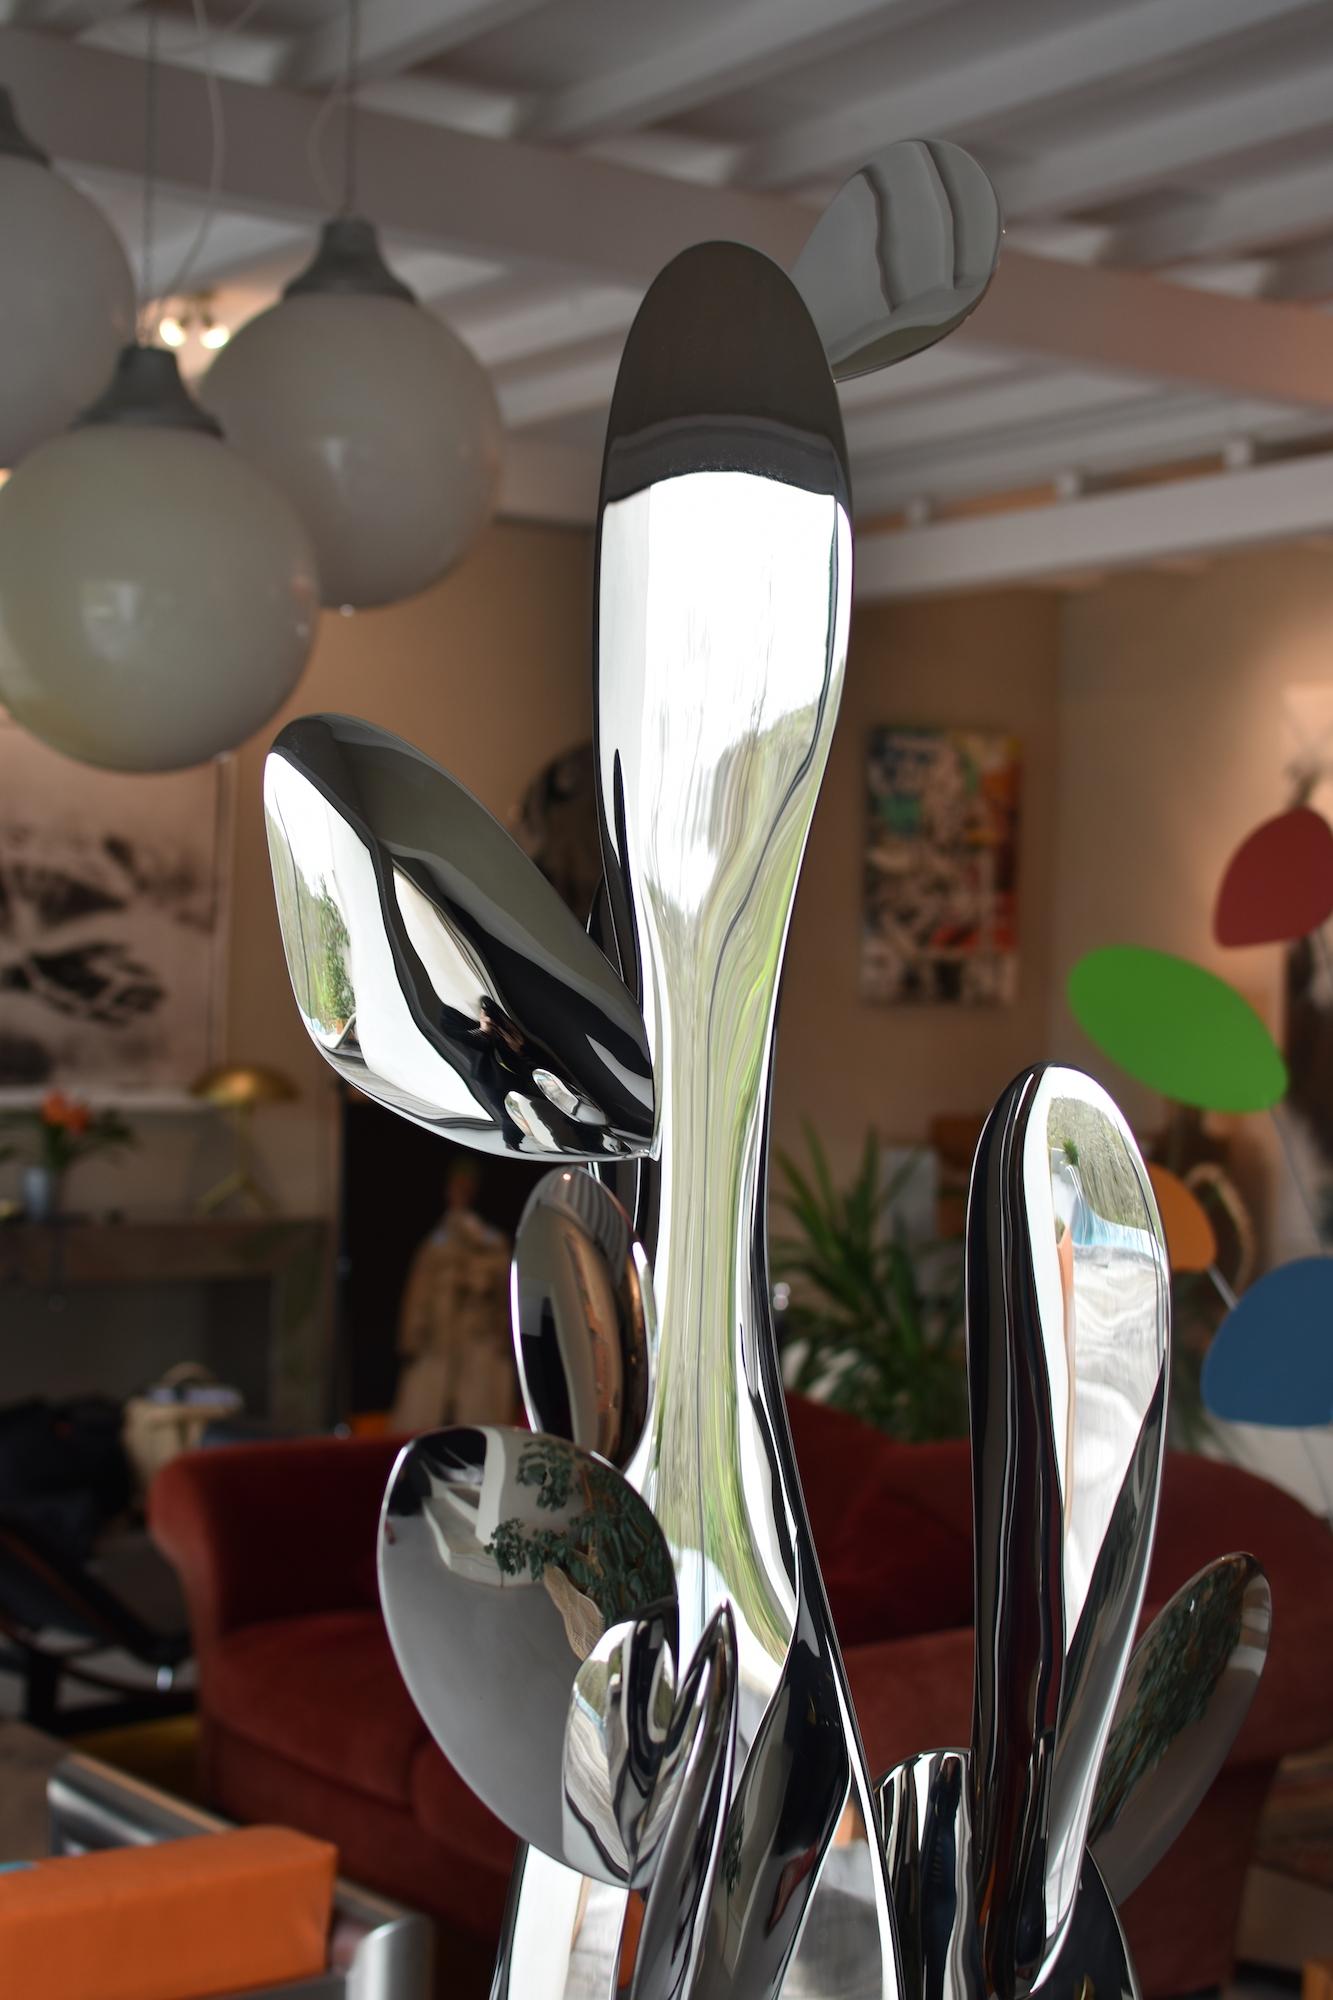 Kaktus by Franck K - Stainless steel sculpture, reflections, light, vision For Sale 9